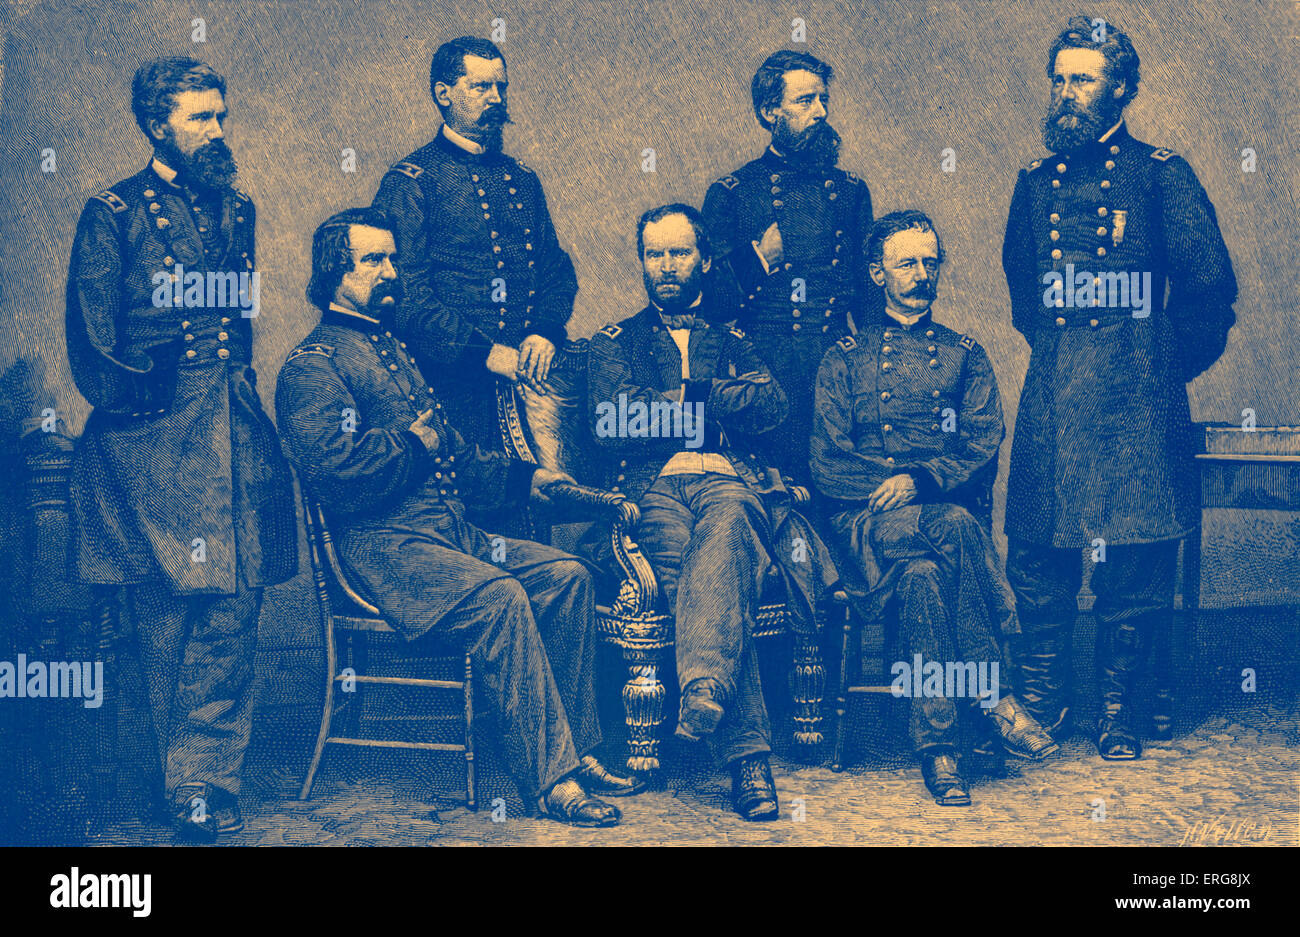 La guerra civile americana - Unione generali. Da sinistra: O.O. Howard, John Logan, W.M.B. Hazen, W.T.Sherman, Jeff C. Davis, Henry W. Foto Stock